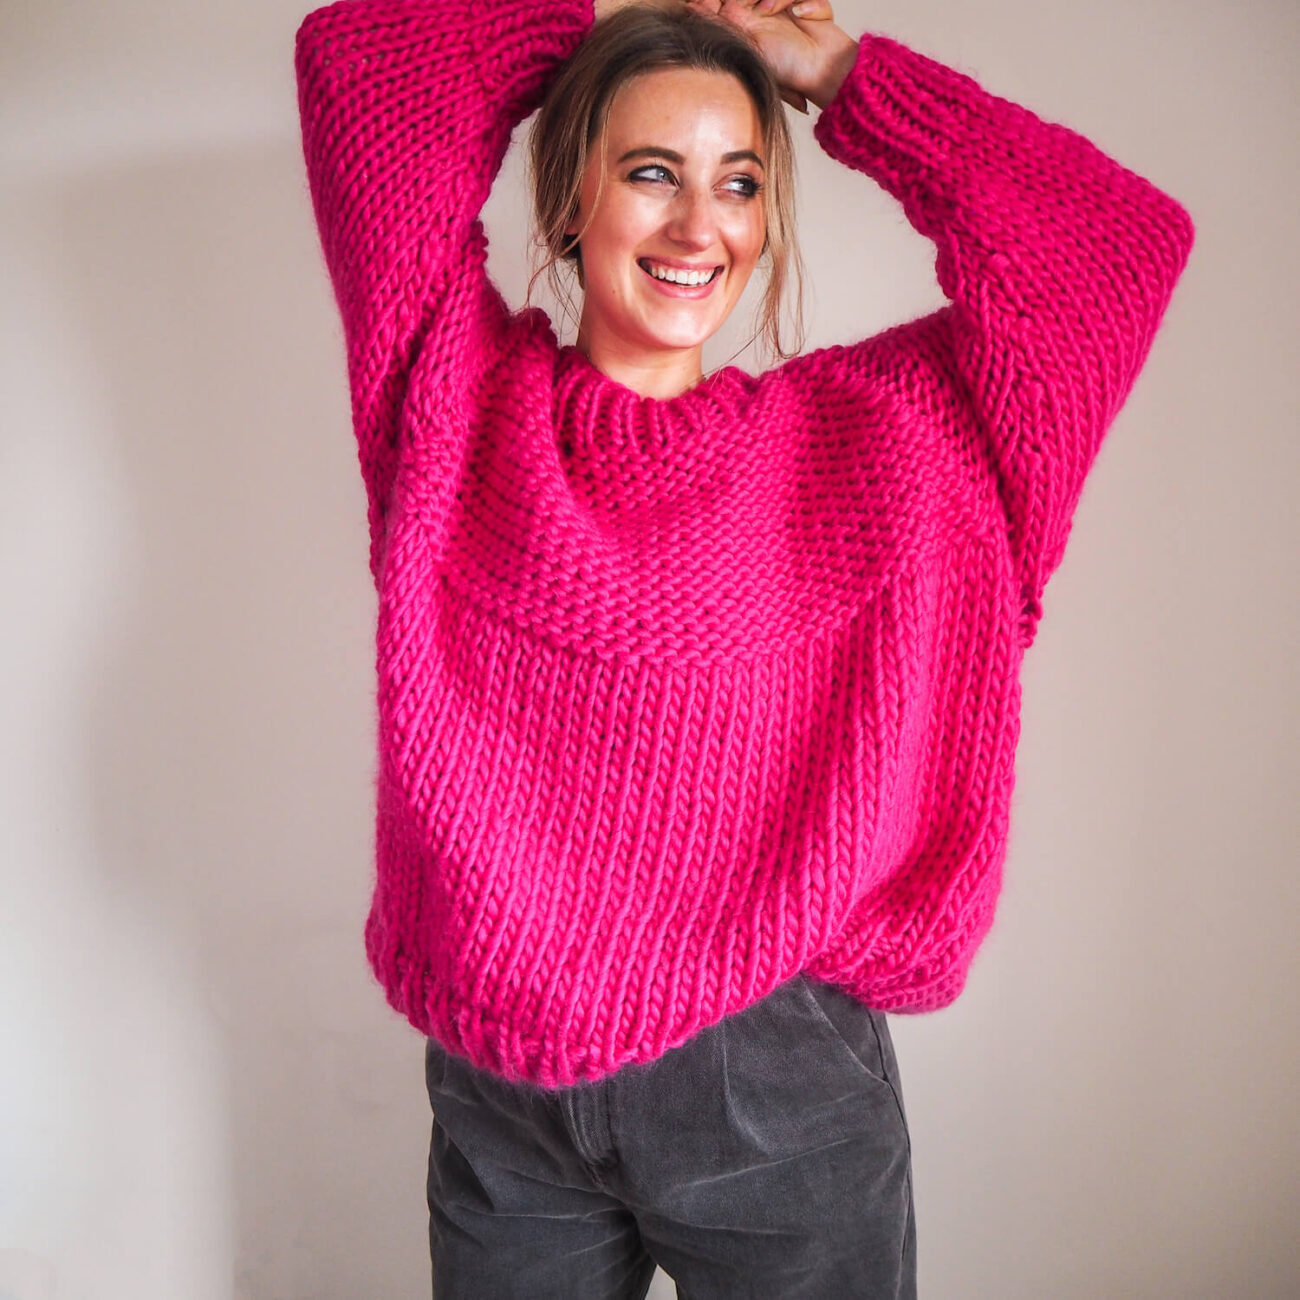 Knitting Kit - Not Your Basic Stitch Jumper - Lauren Aston Designs